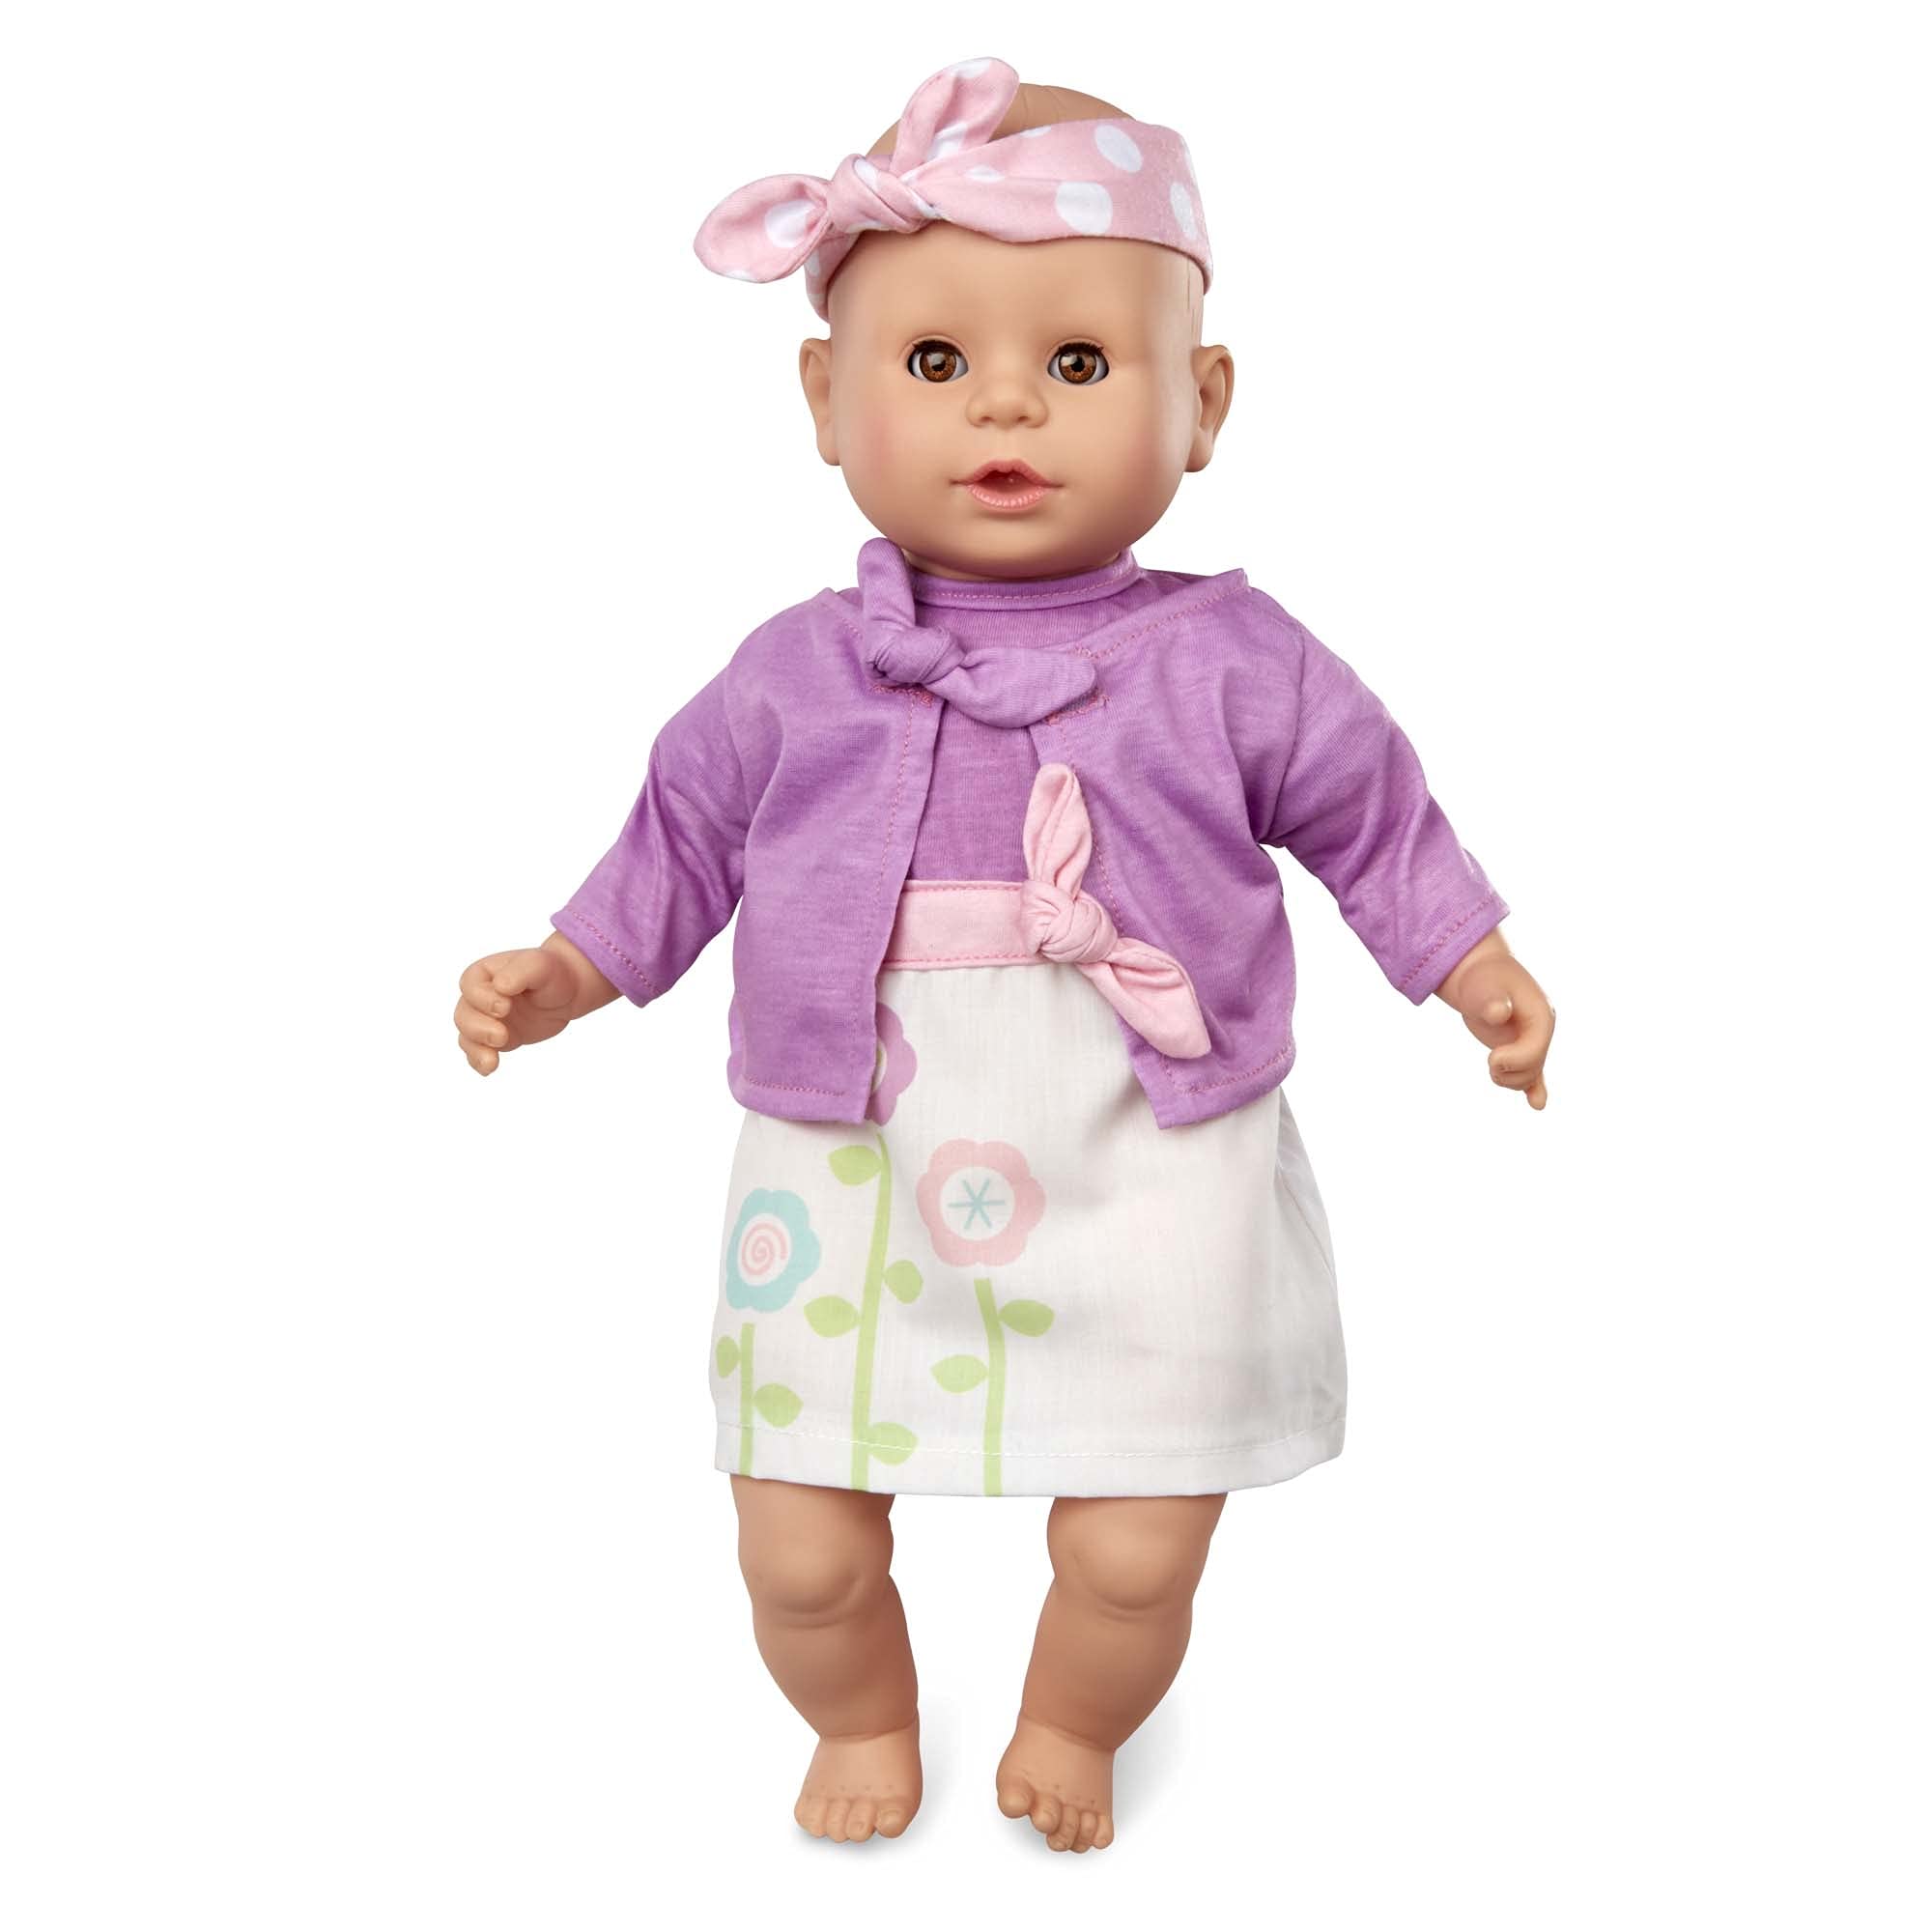 Melissa & Doug Mine to Love Mix & Match Fashion Doll Clothes for 12”-18” Dolls (6 pcs)